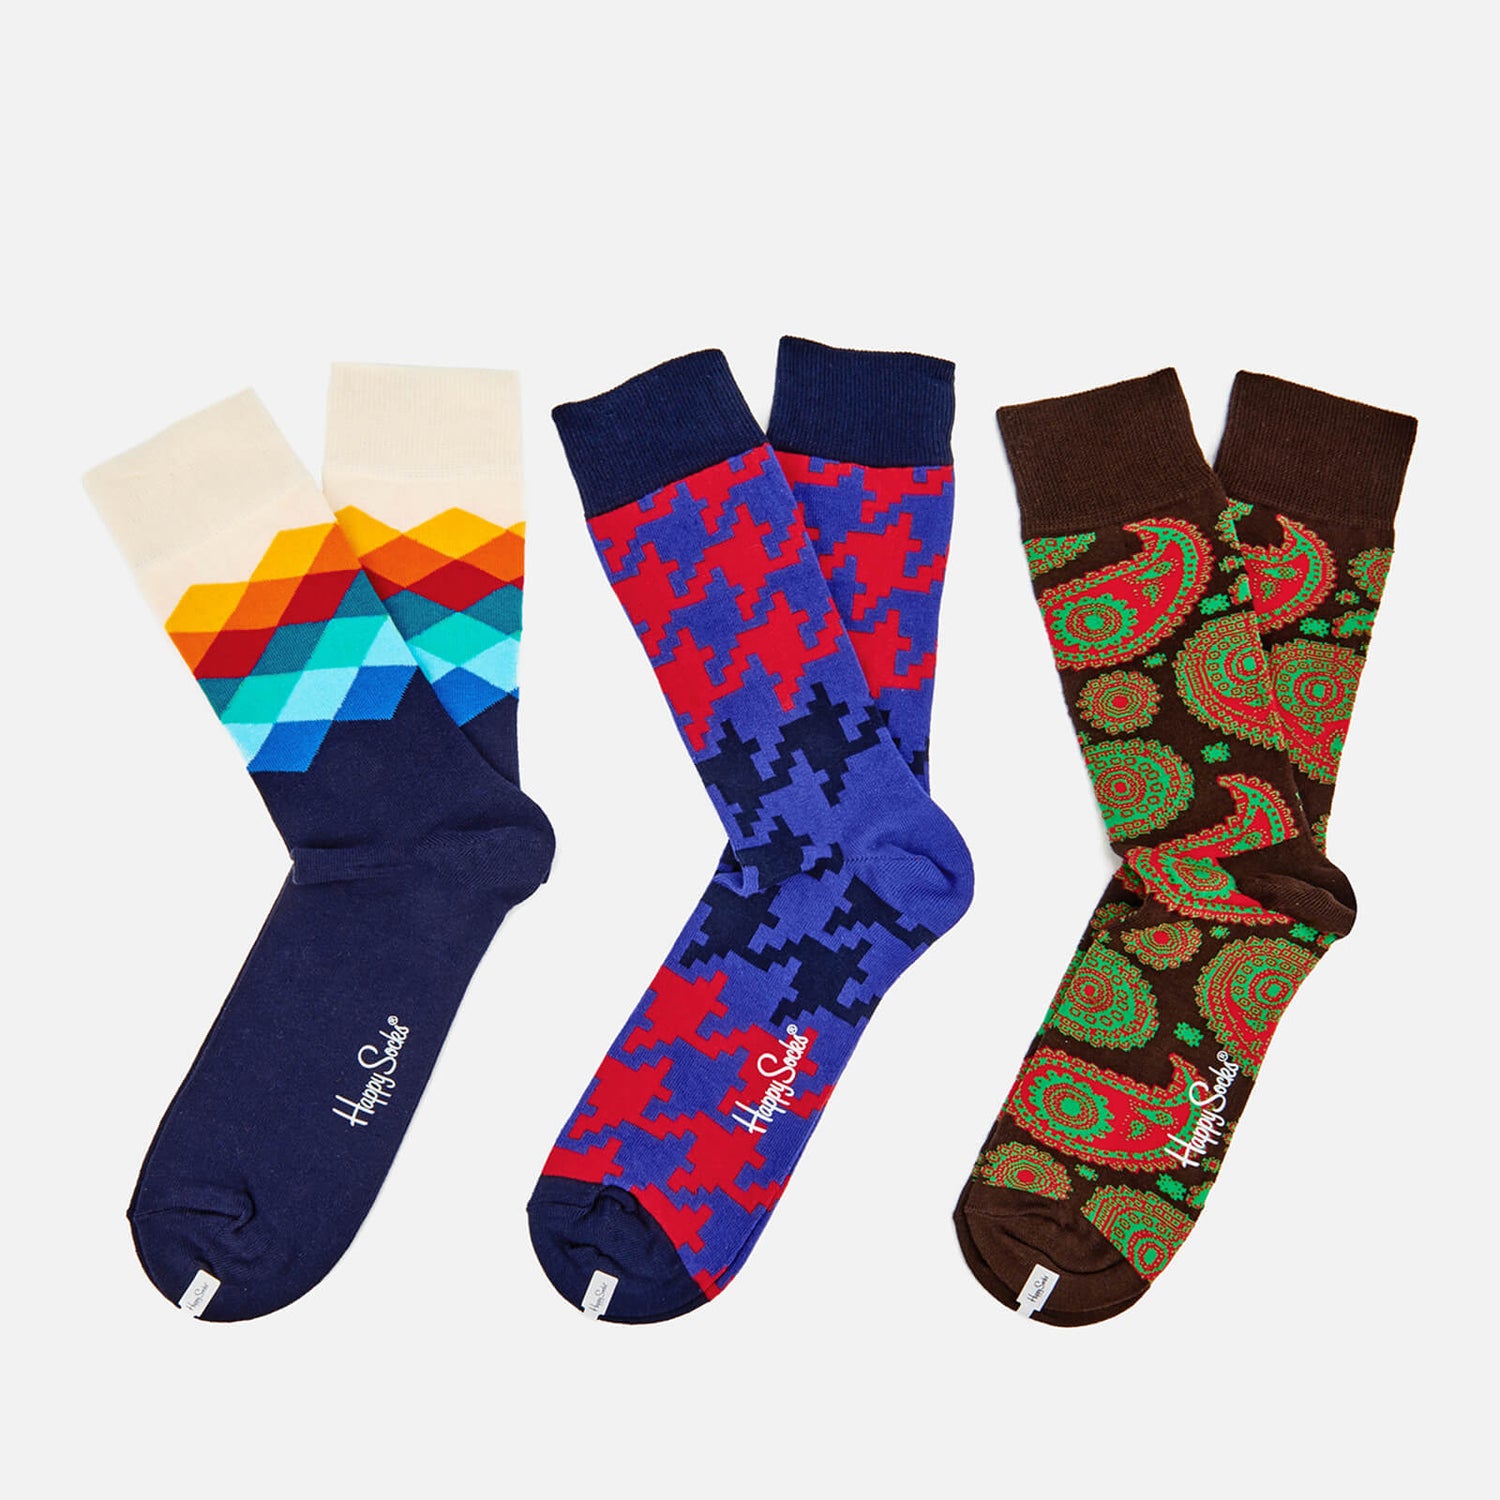 Happy Socks Mens Patterned 3 Pack Socks - Multi - UK 7.5-11.5 | TheHut.com